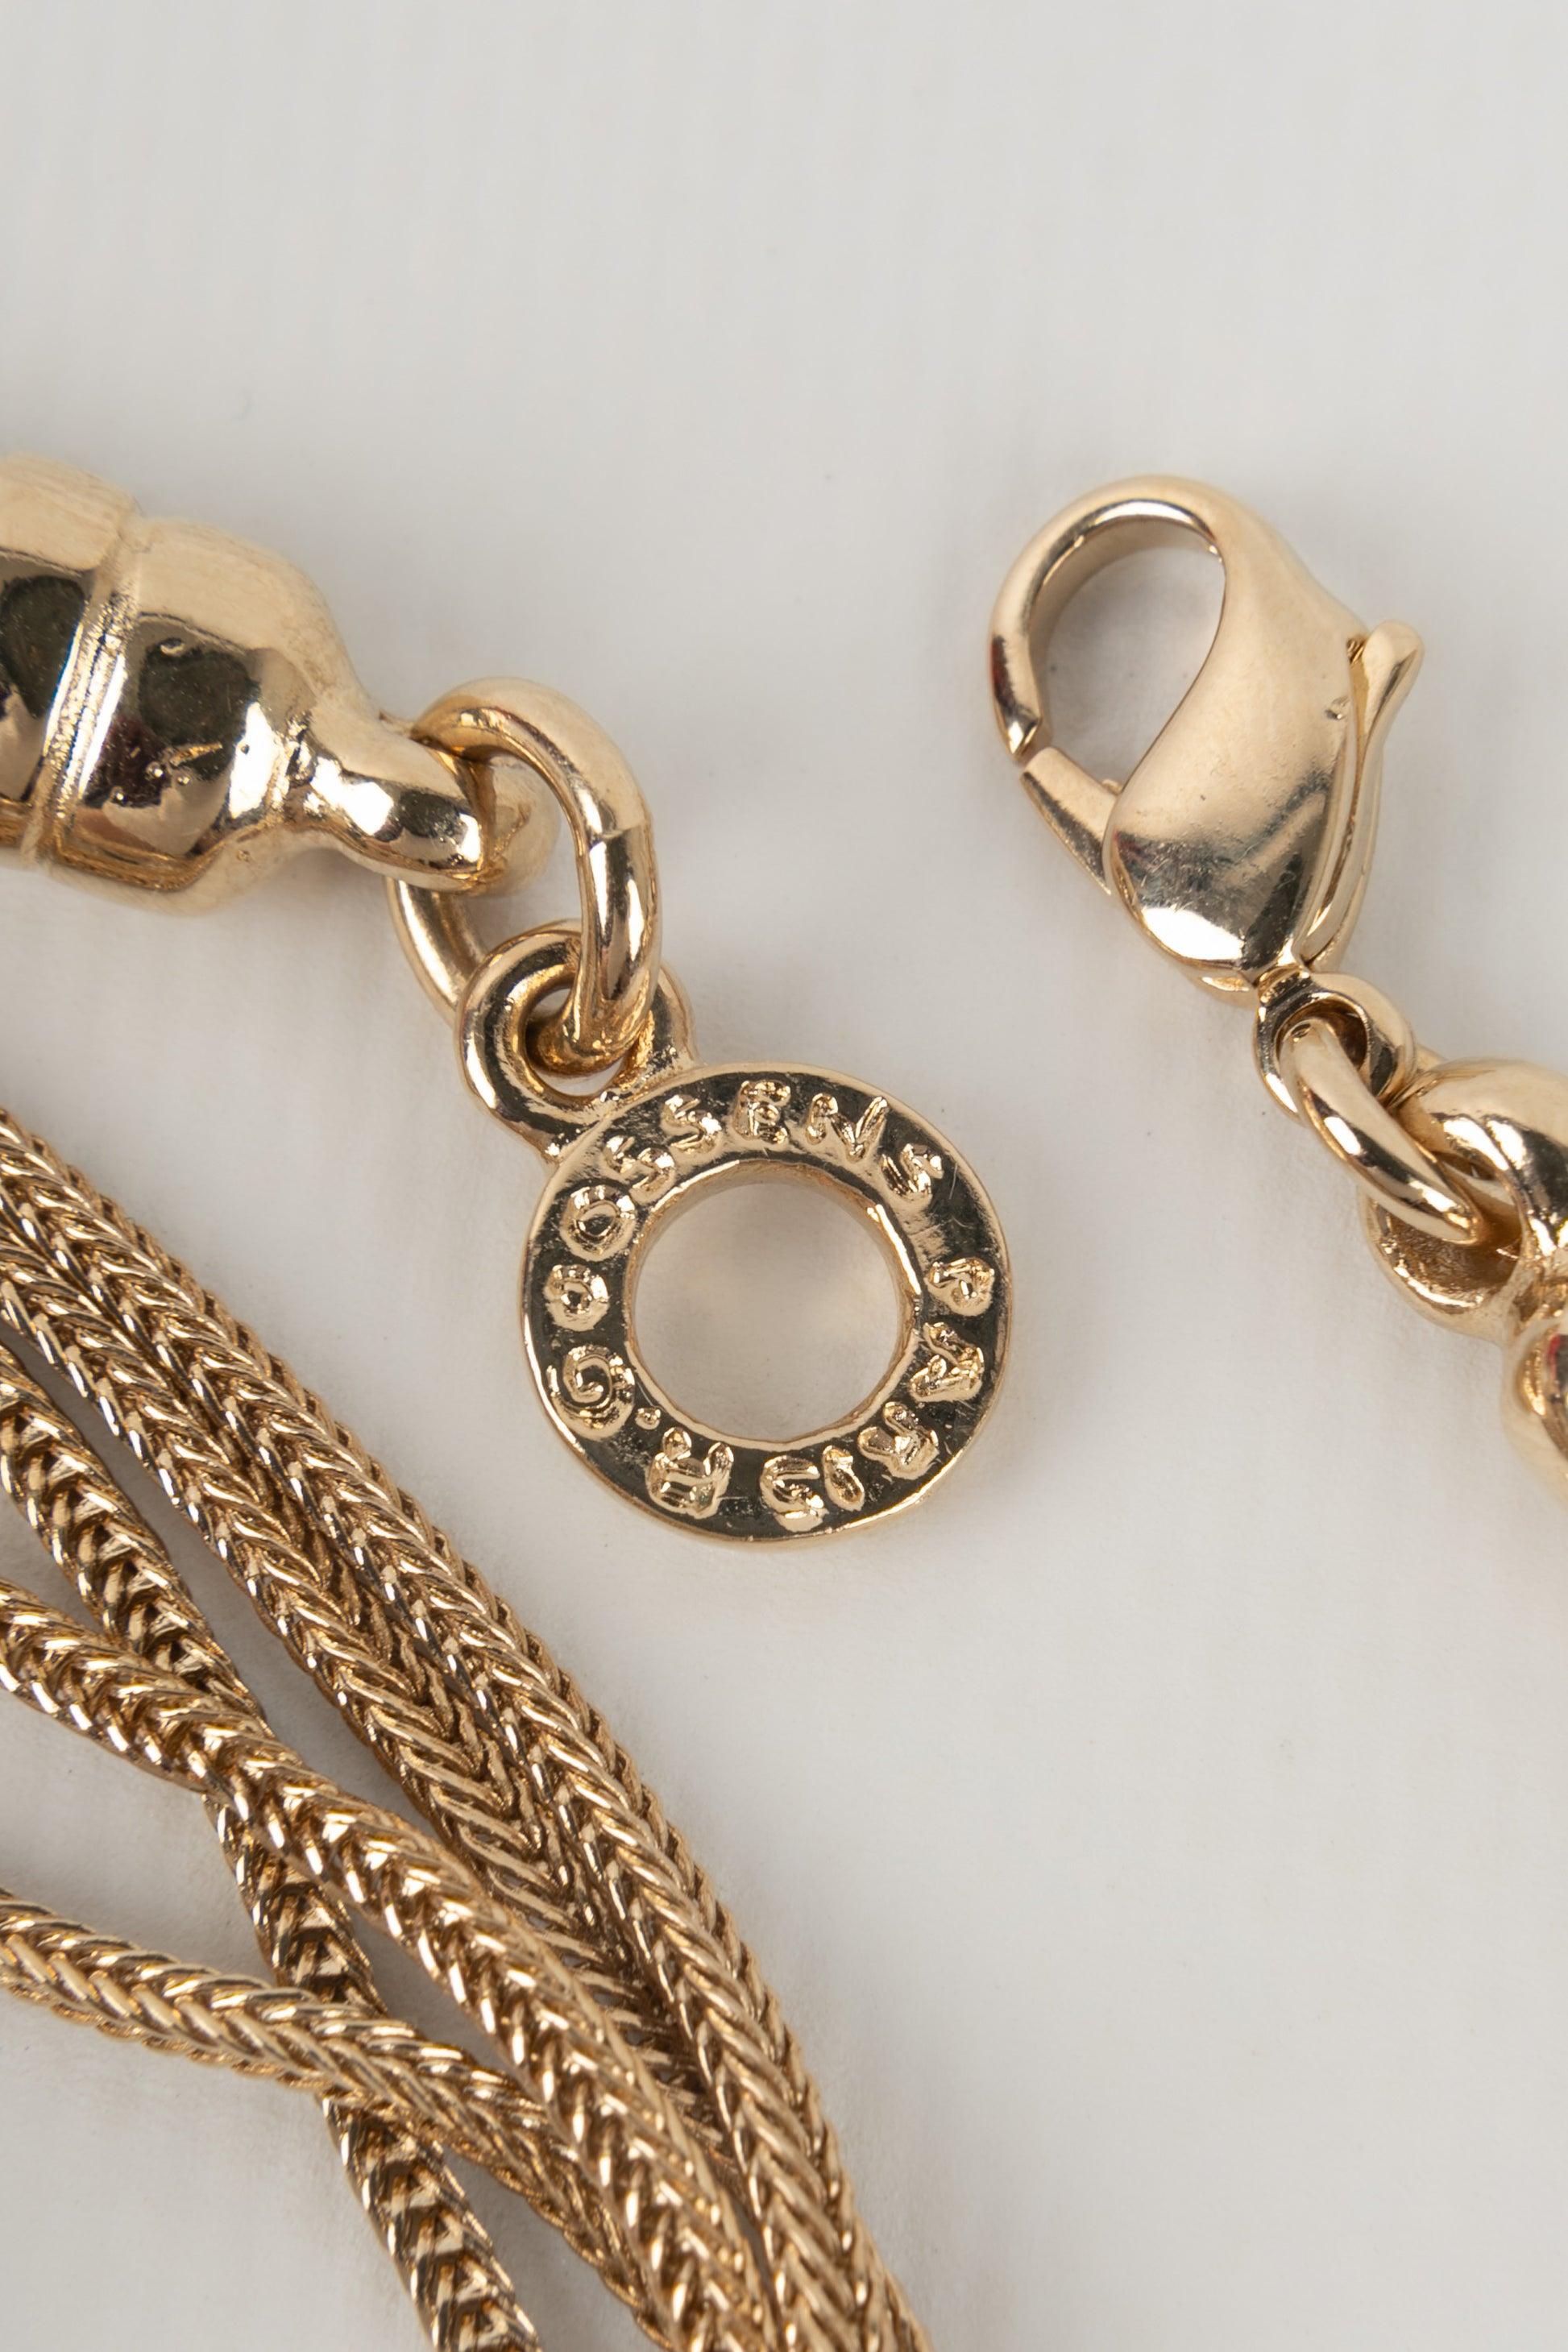 Jean Paul Gaultier Champagne Metal Necklace In Excellent Condition For Sale In SAINT-OUEN-SUR-SEINE, FR